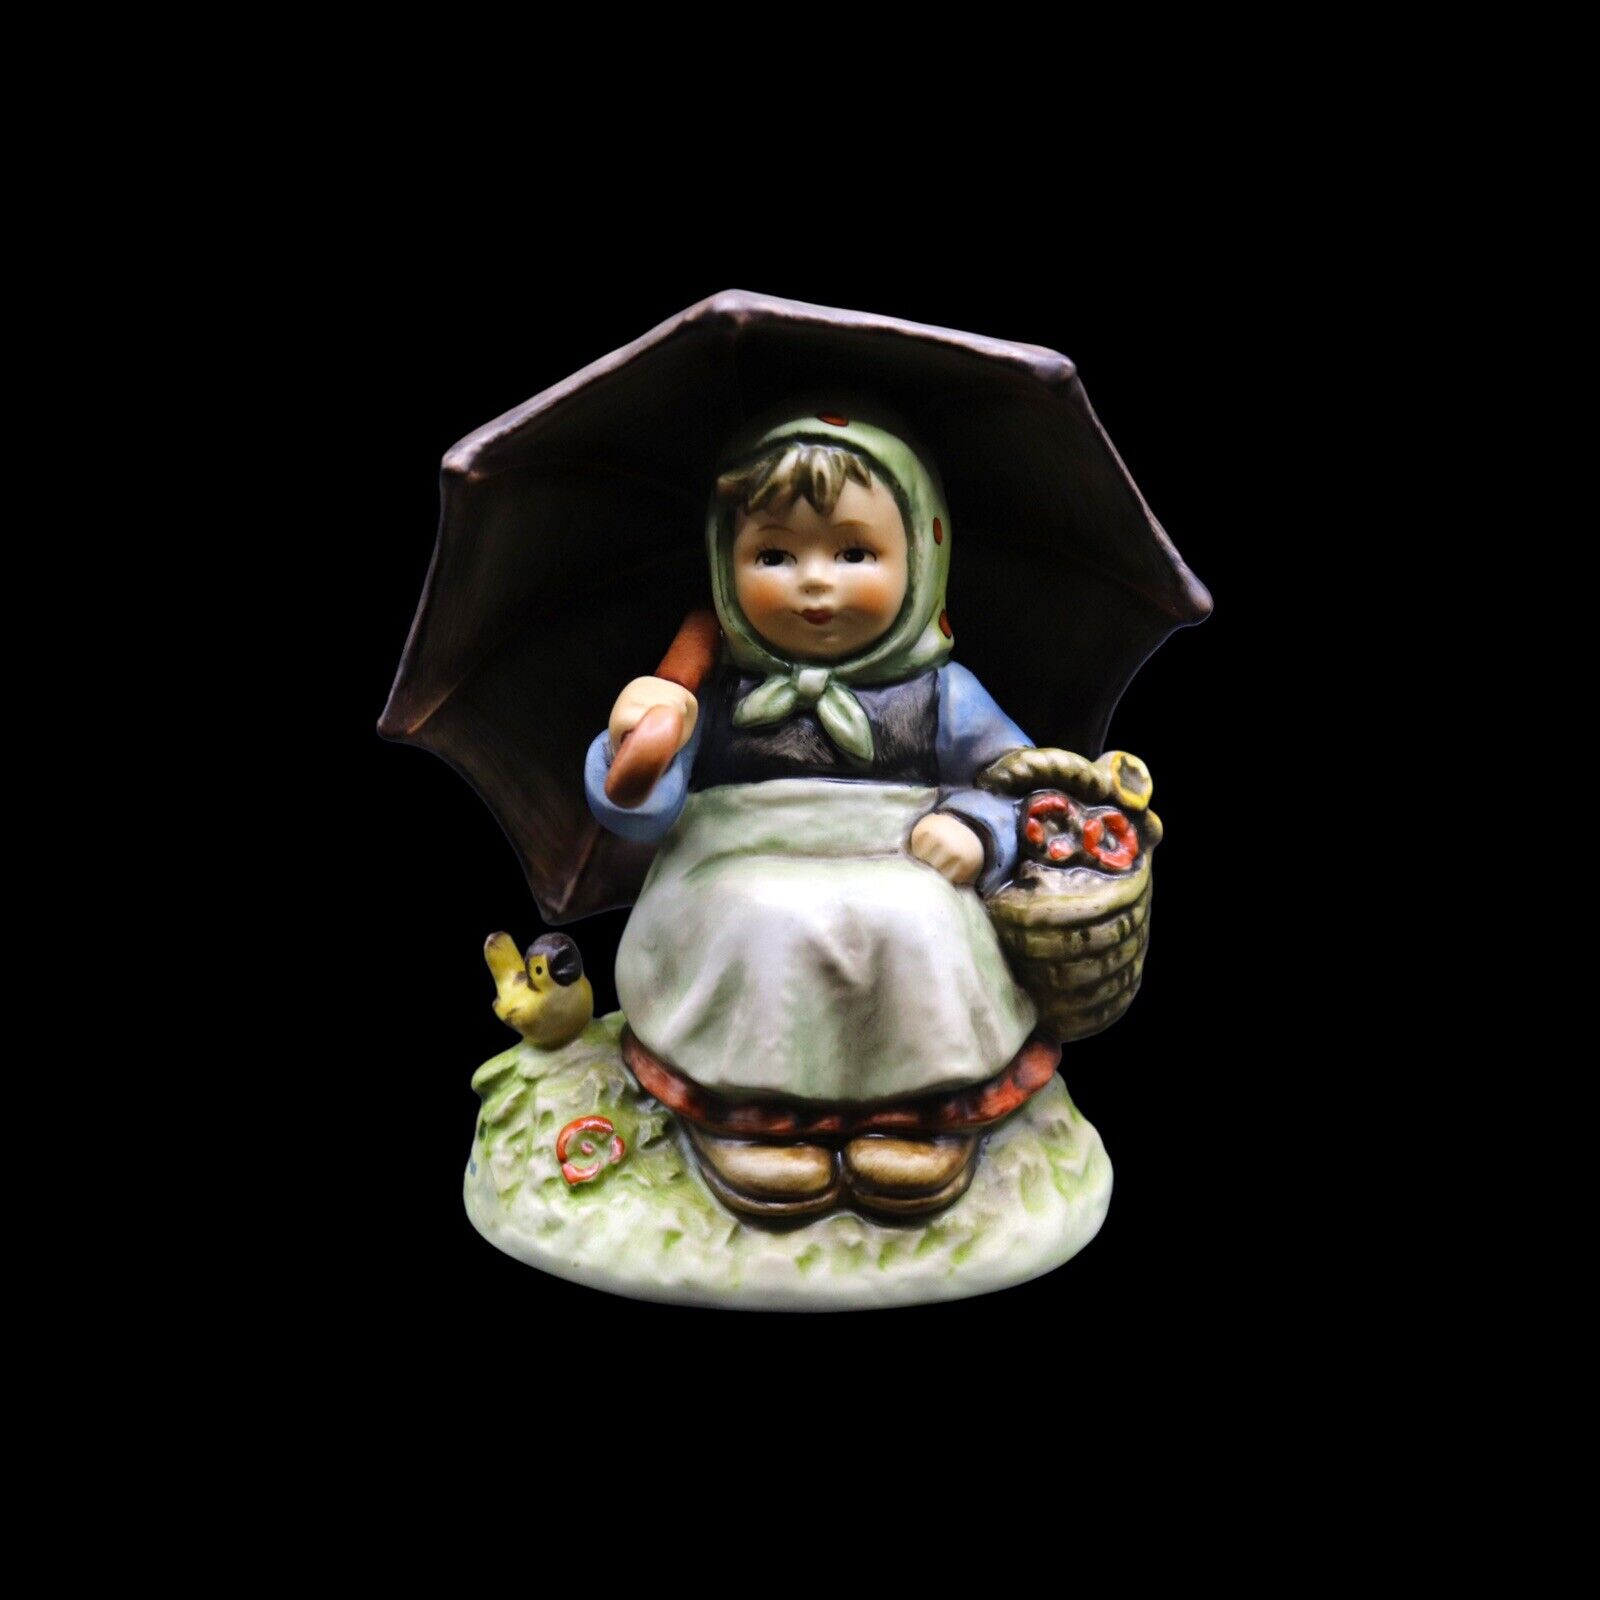 Goebel Hummel Porcelain “Smiling Through” #408 Figurine with Original Box - TMK6